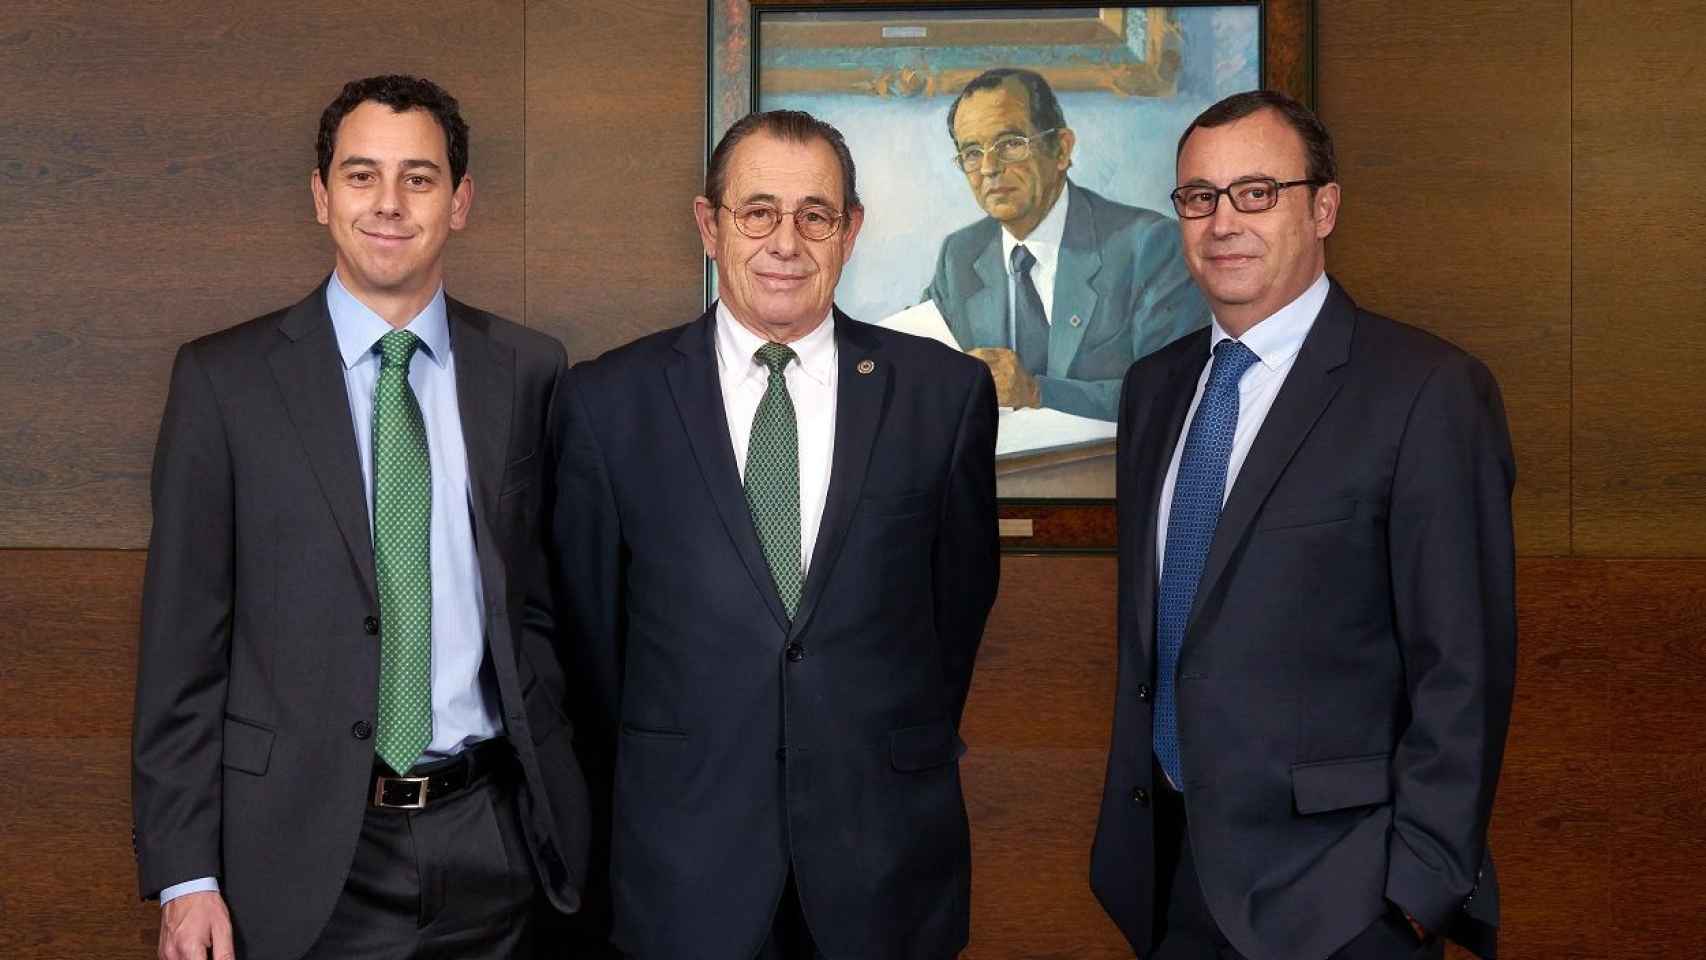 Foto de familia de la saga de los Grífols: Víctor (nieto), Víctor (presidente) y Raimon (hijo) / Grifols.com